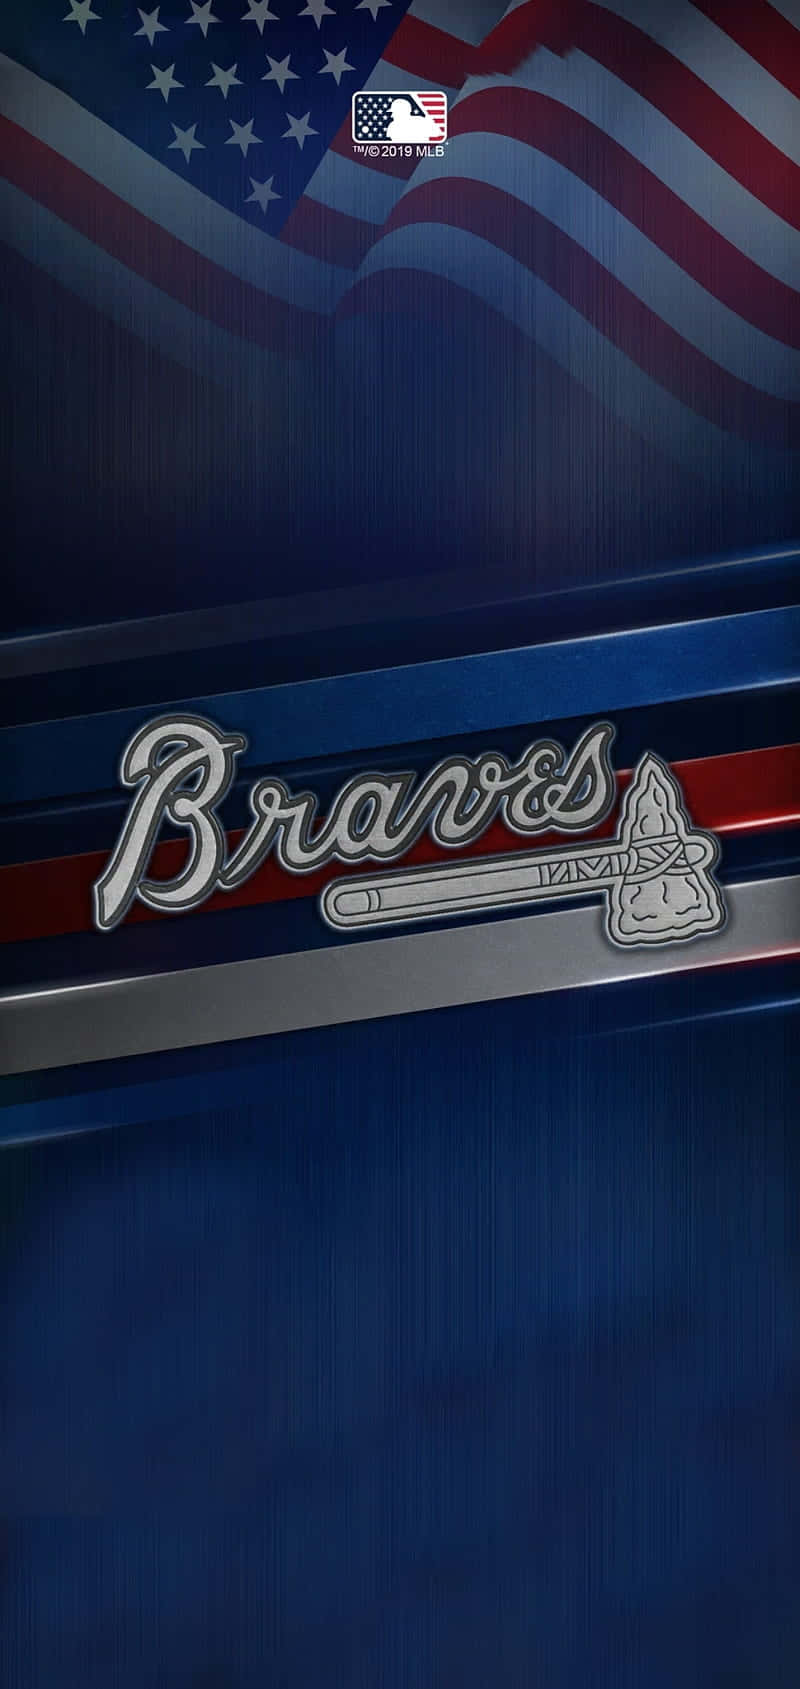 Download The Atlanta Braves Arrive on iPhone Wallpaper